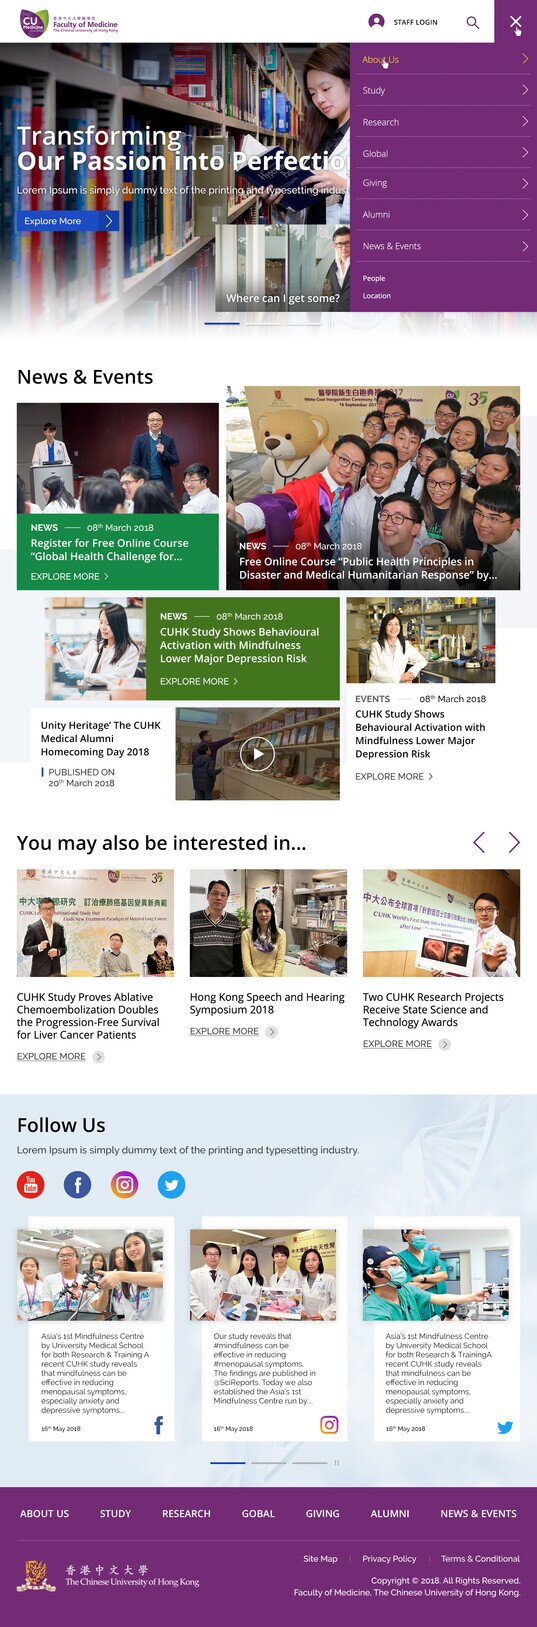 Chinese University of Hong Kong website screenshot for tablet version 2 of 4